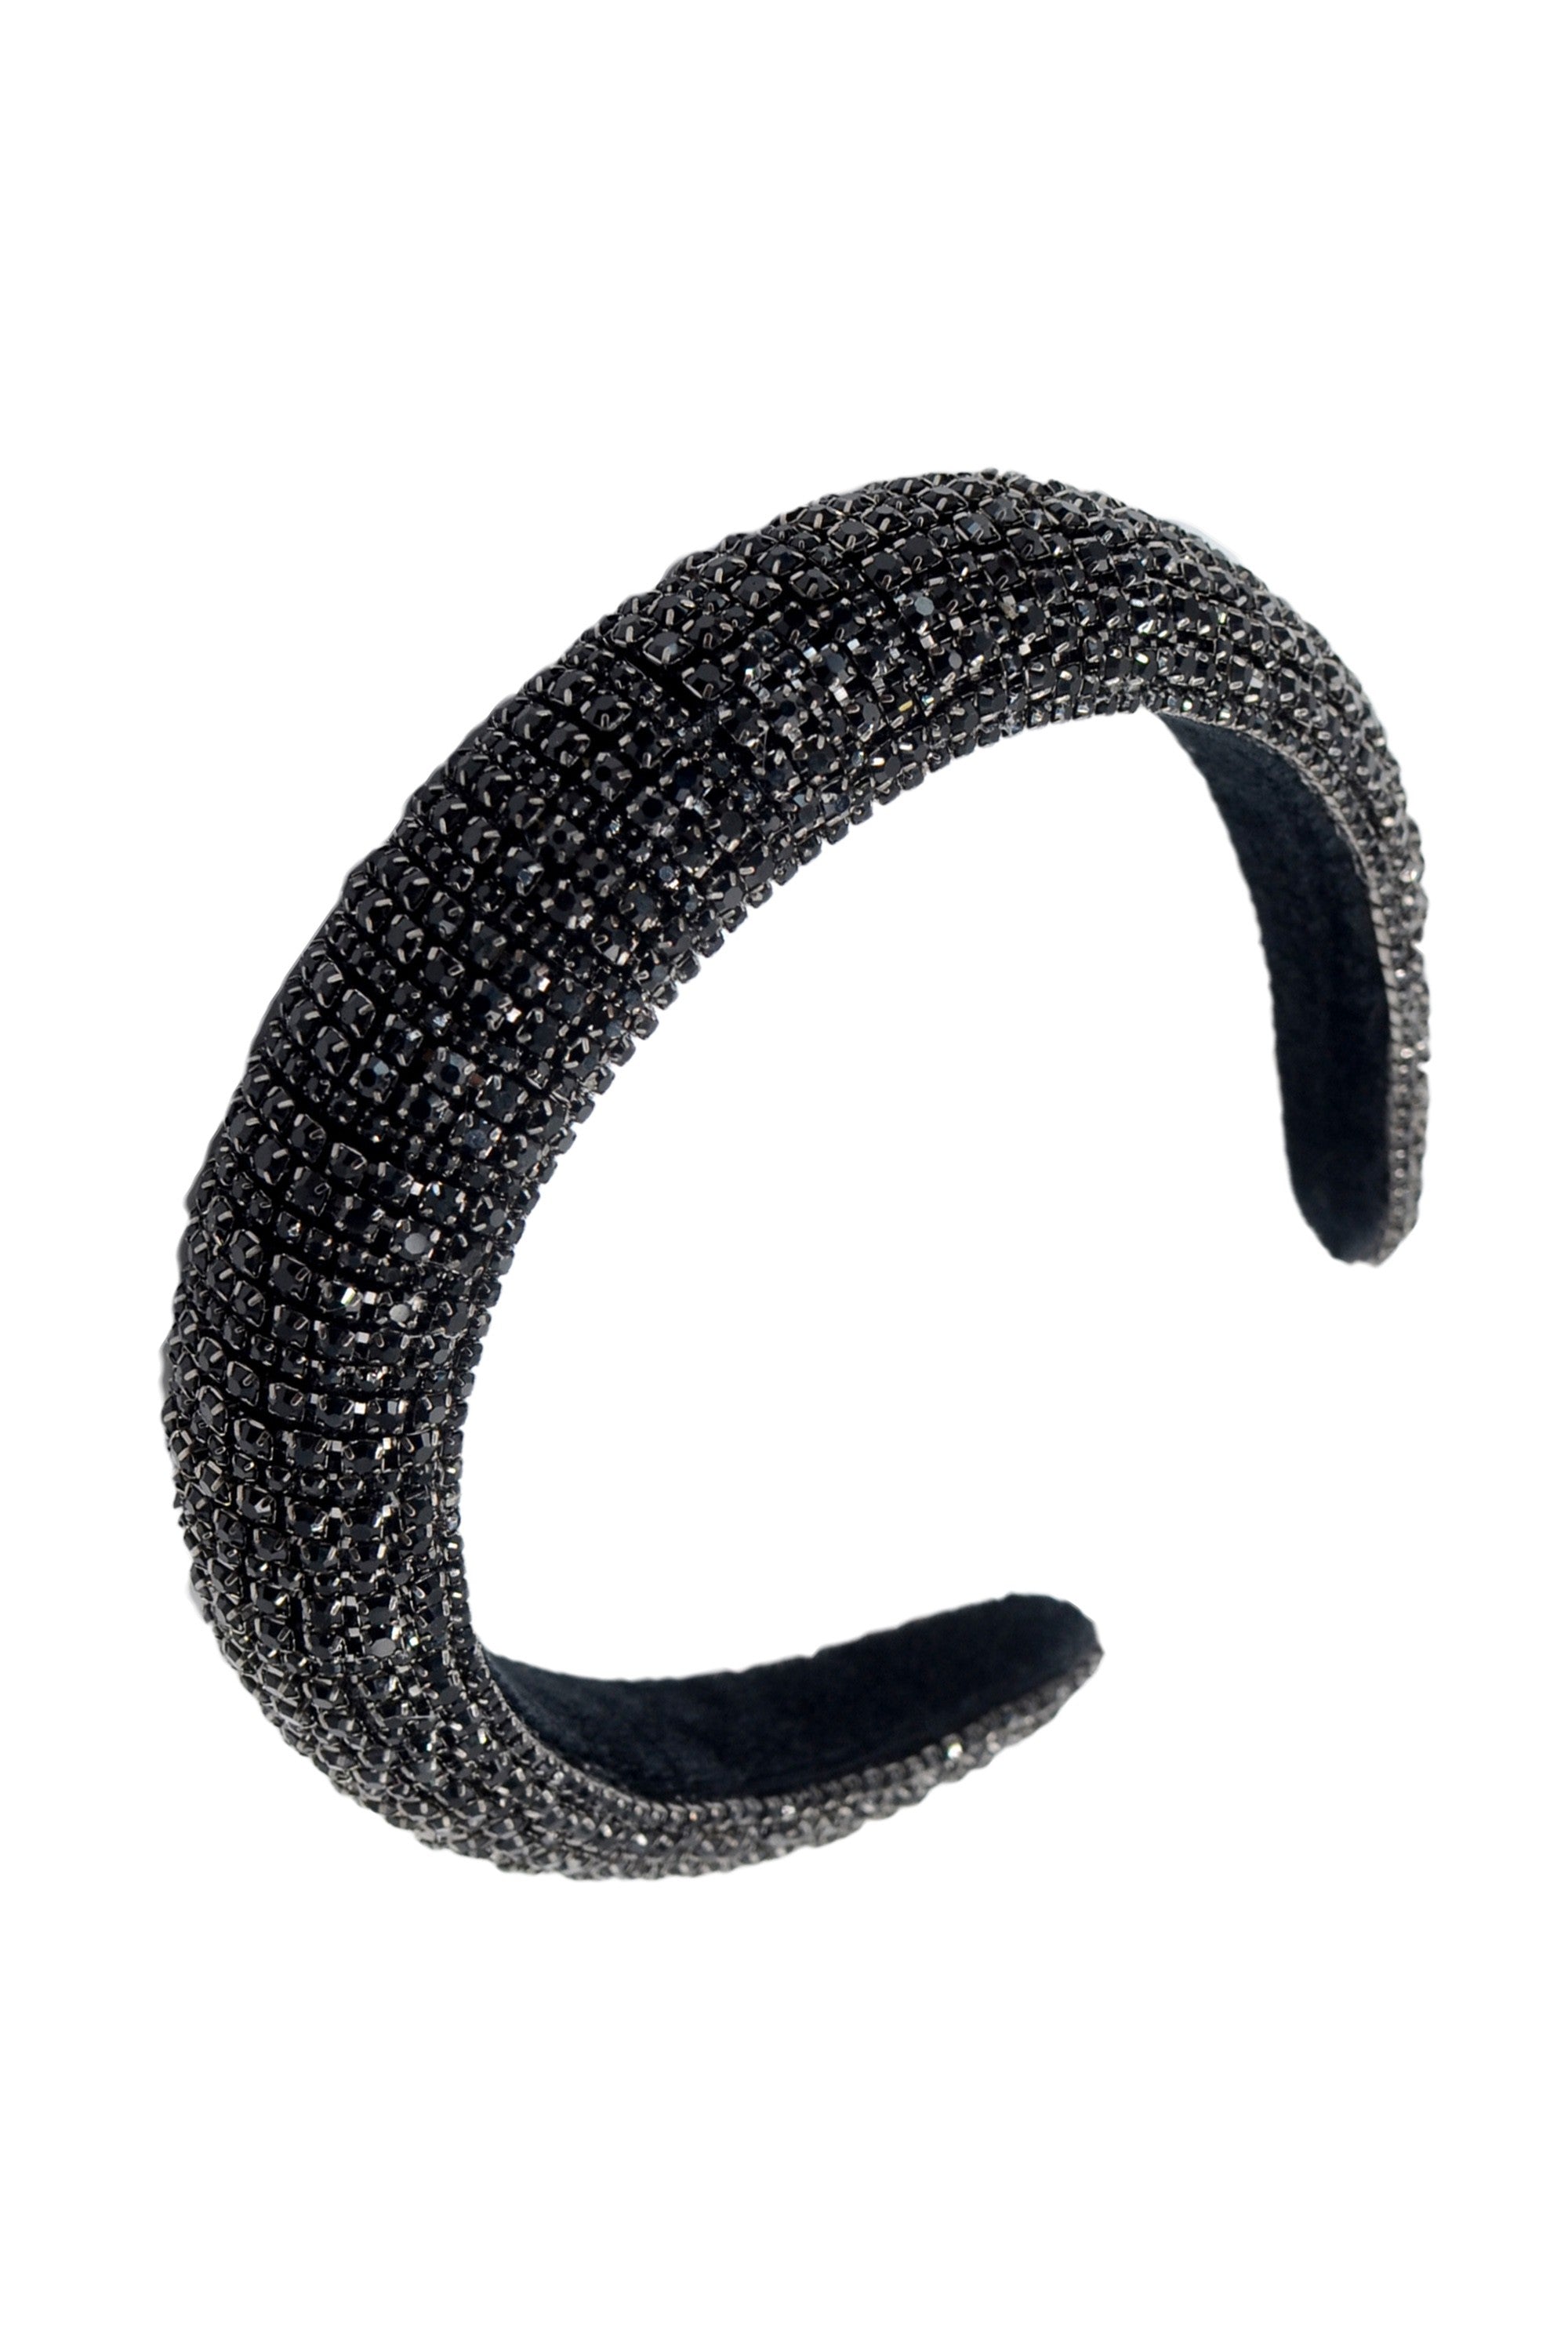 Black Rhinestone Headband